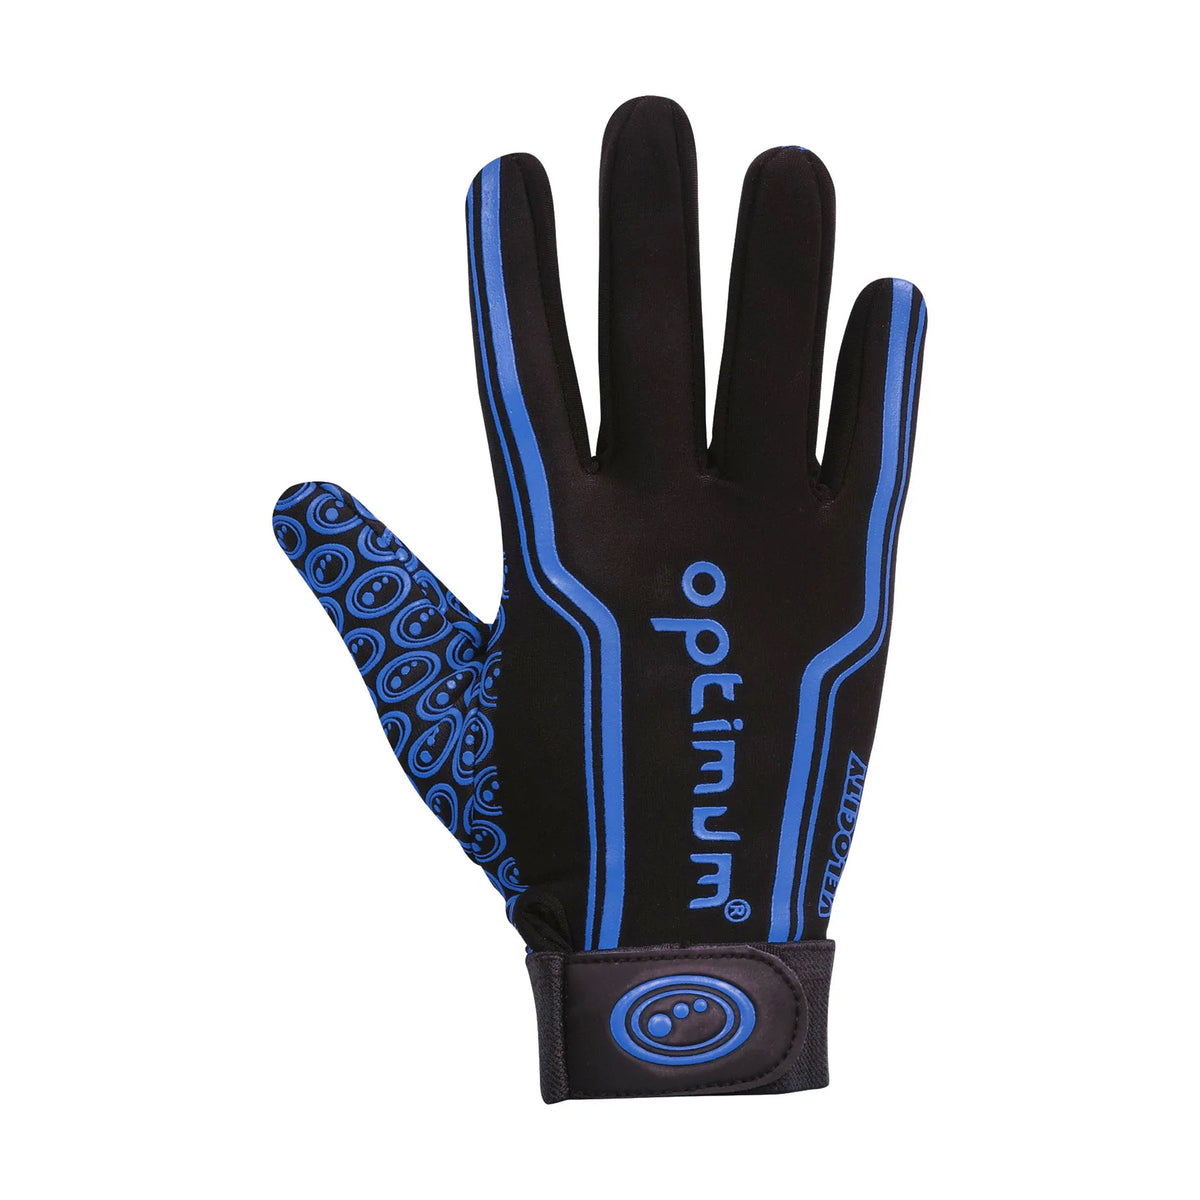 Optimum Velocity Thermal Rugby Gloves: Blue/Black